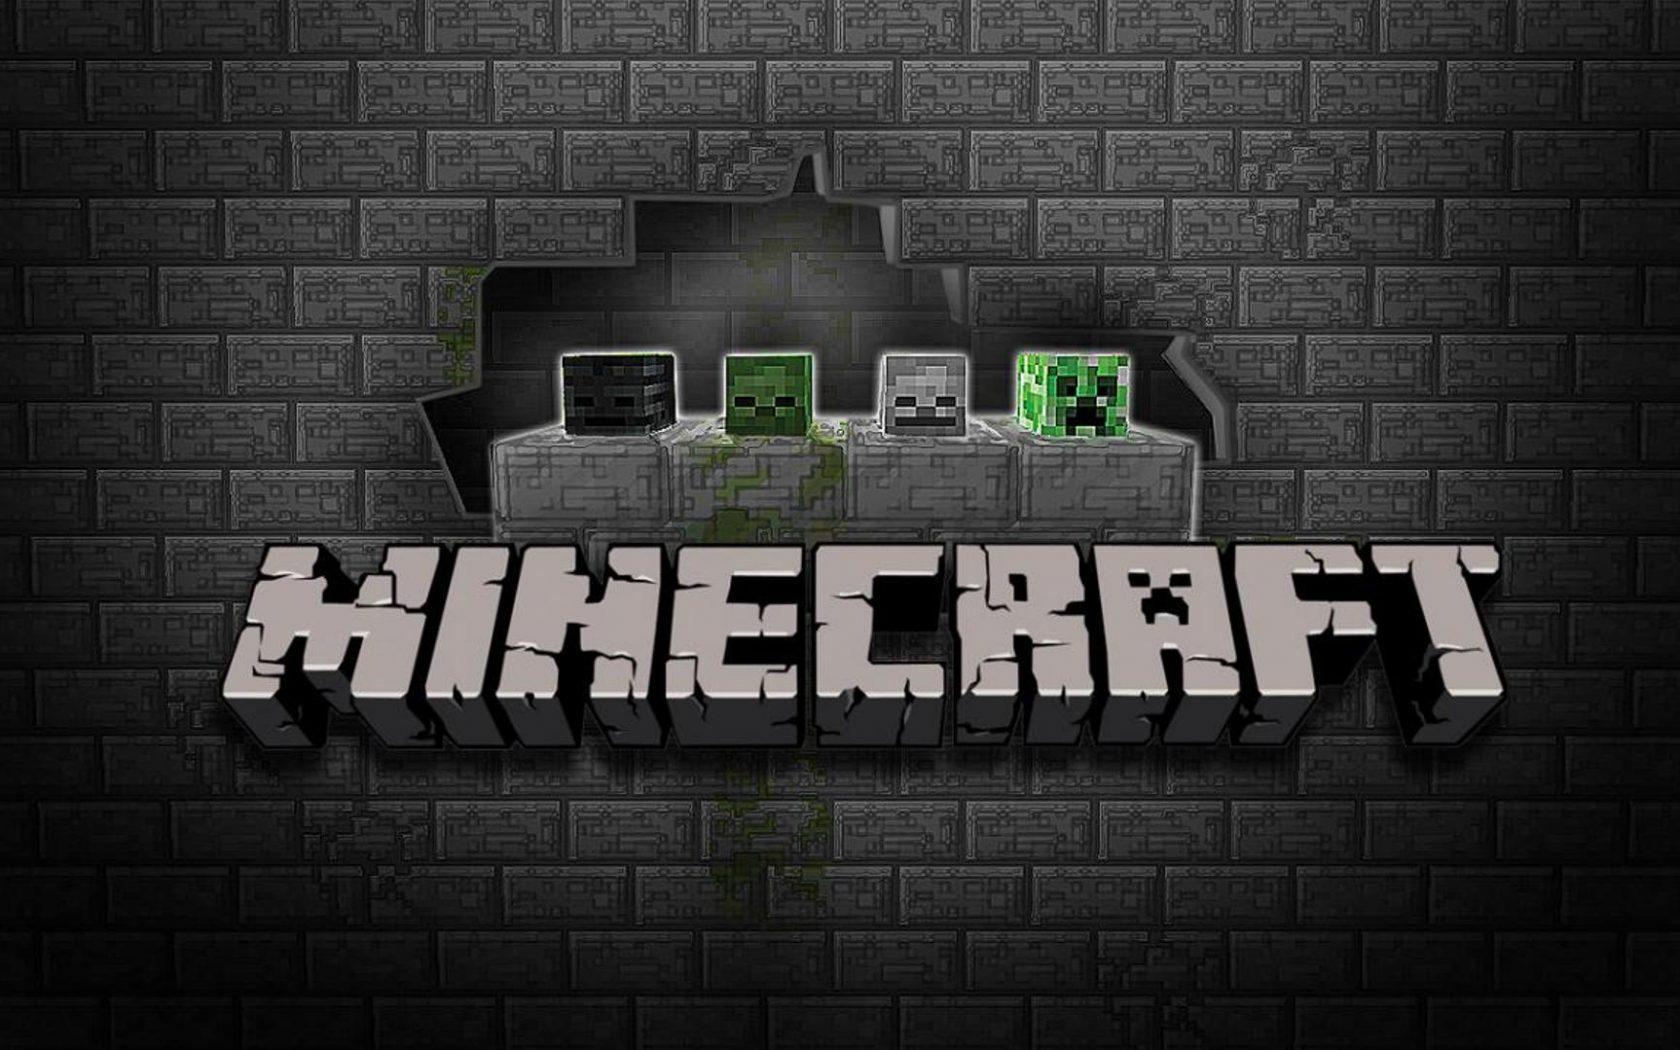 Cool Minecraft Logo - Cool Minecraft Game Logo Wallpaper Background Image